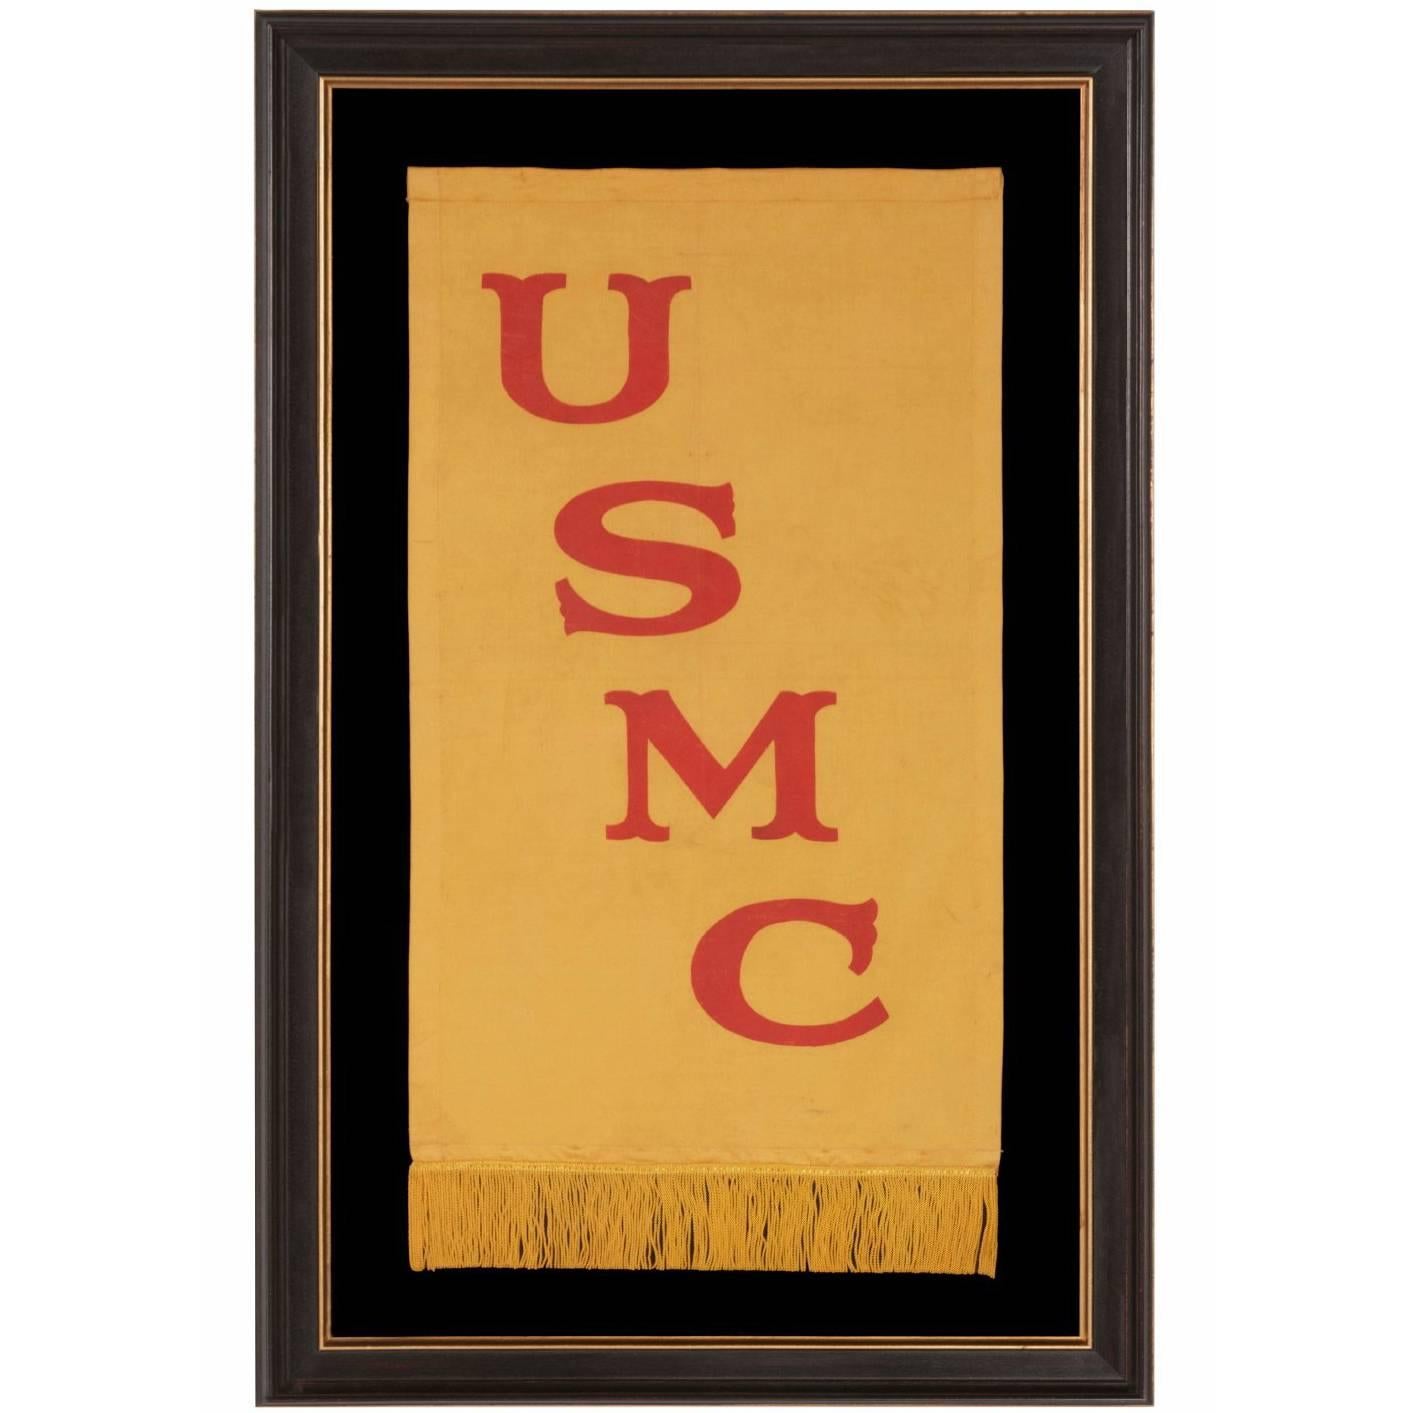 Rare United States Marine Corps Banner of the 1910-1920 Era